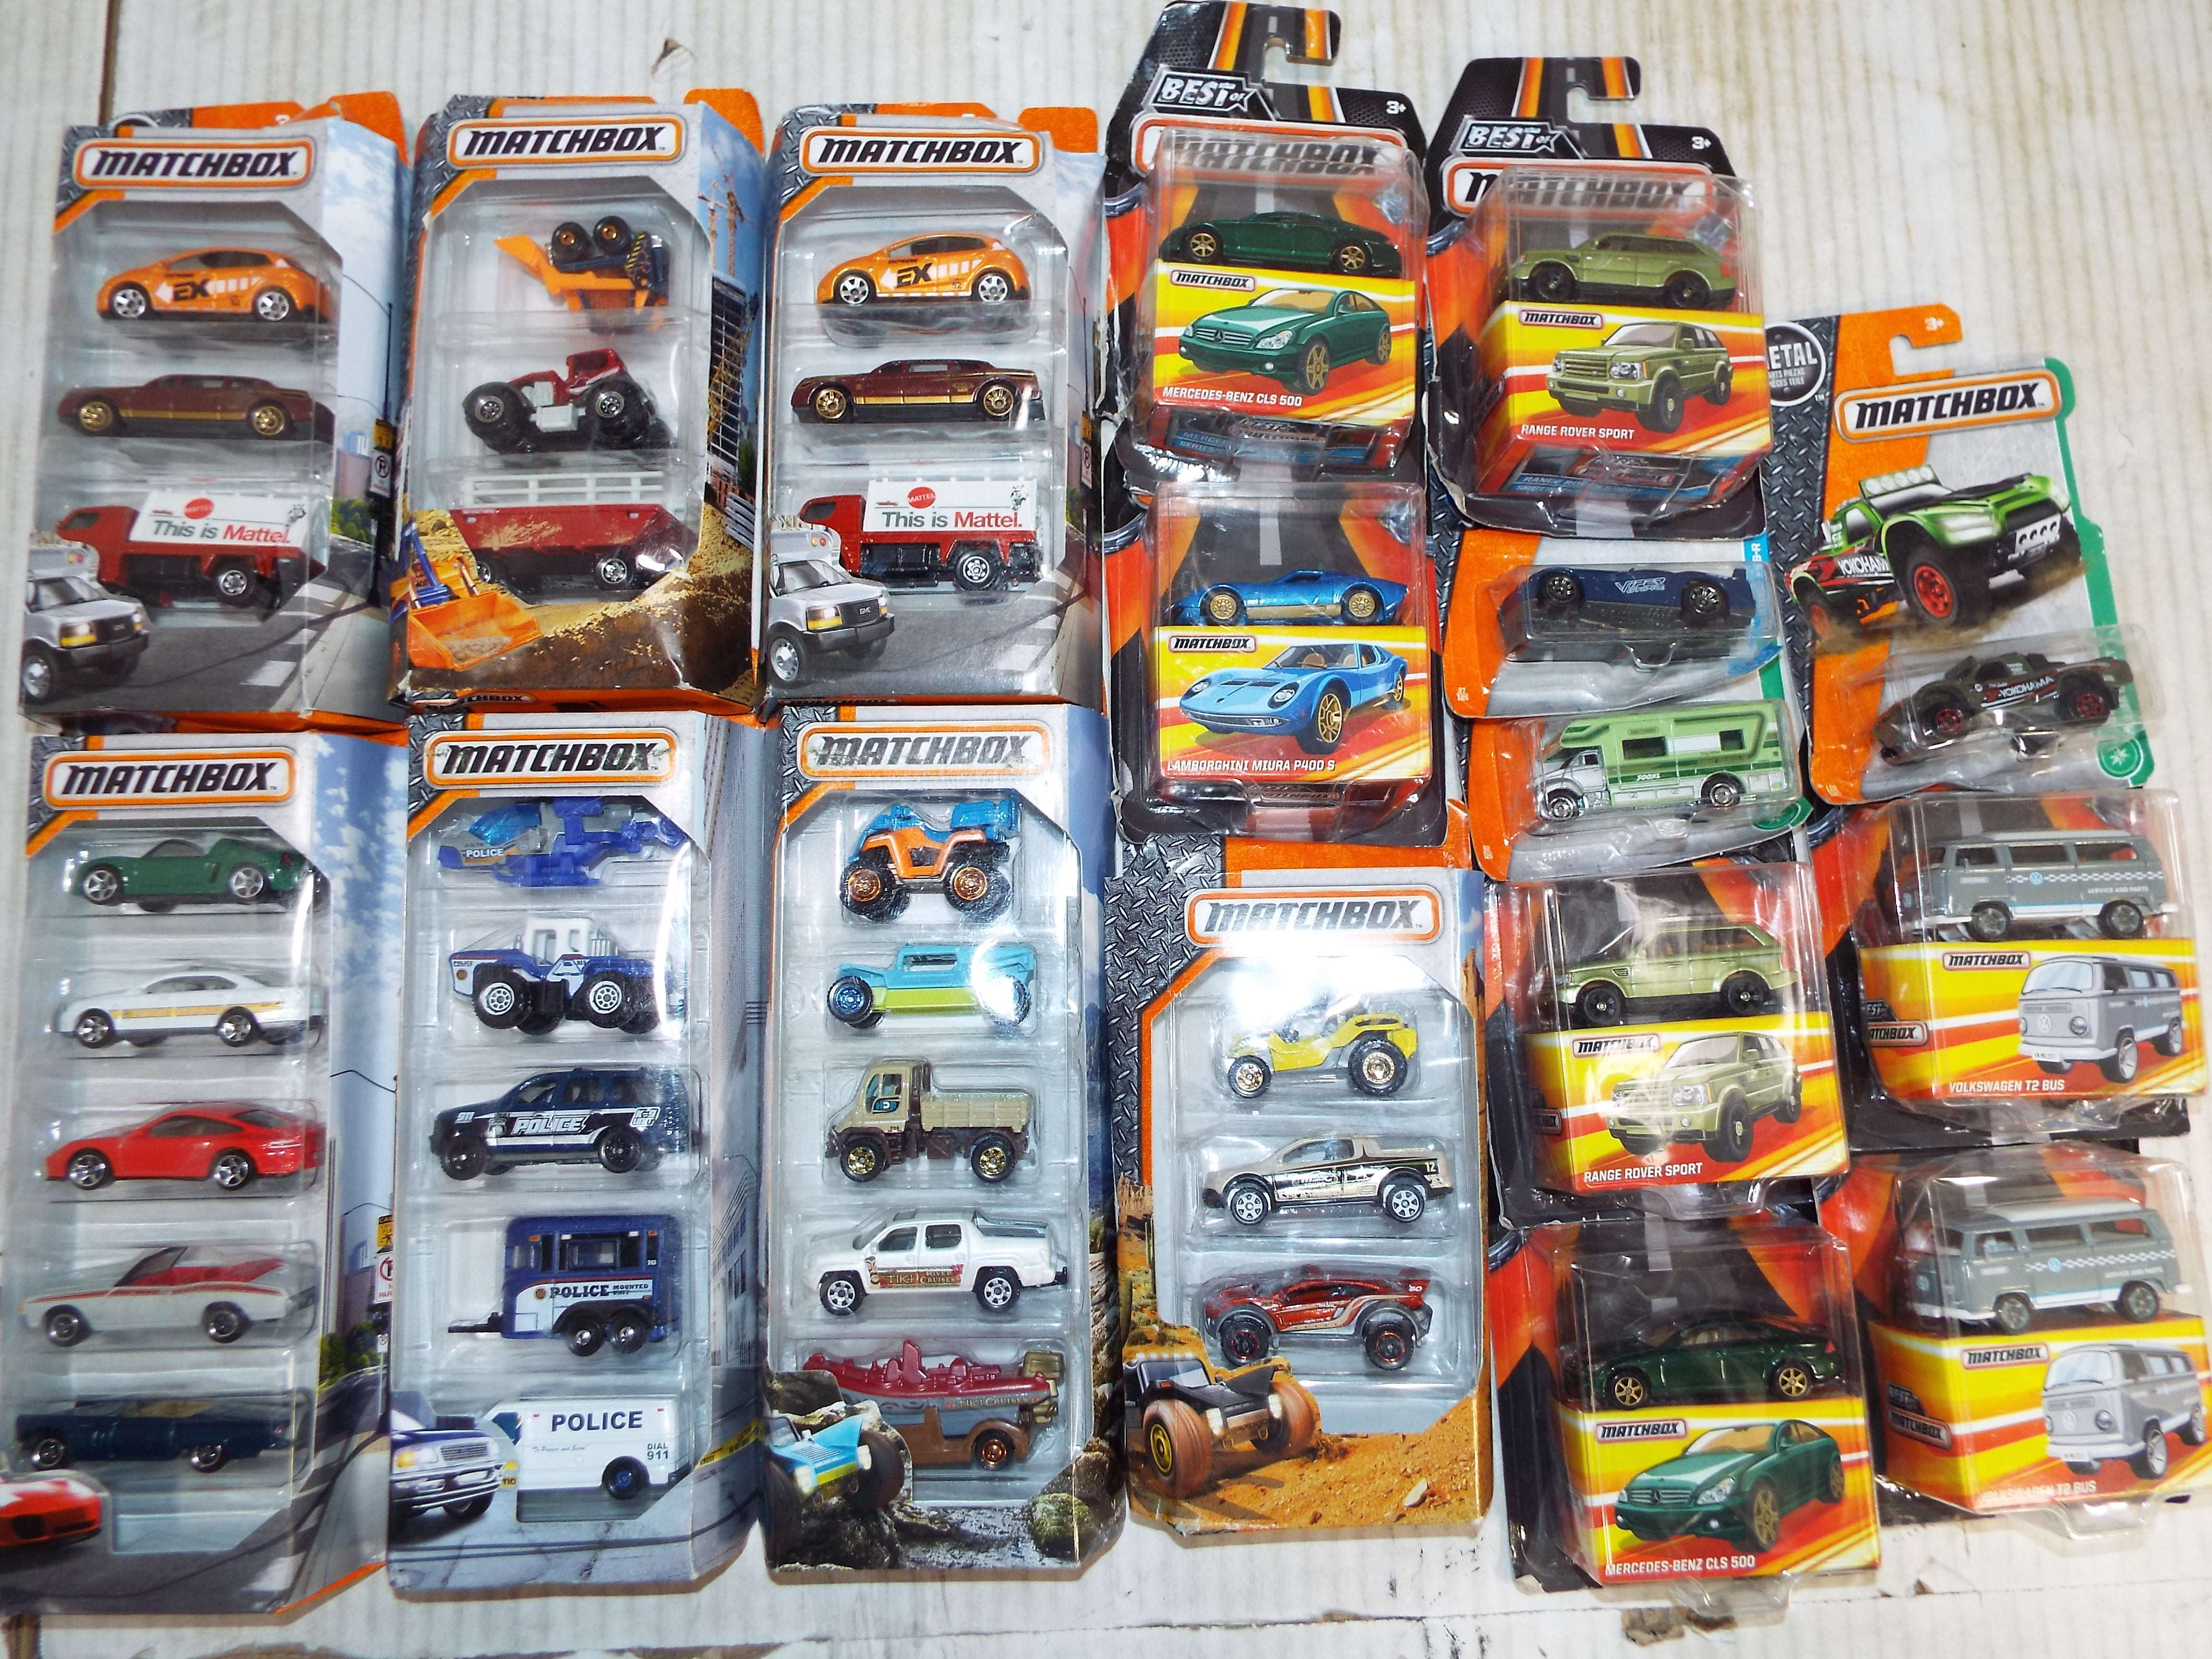 Lot of 37 Matchbox Toy Vehicles - Walmart.com